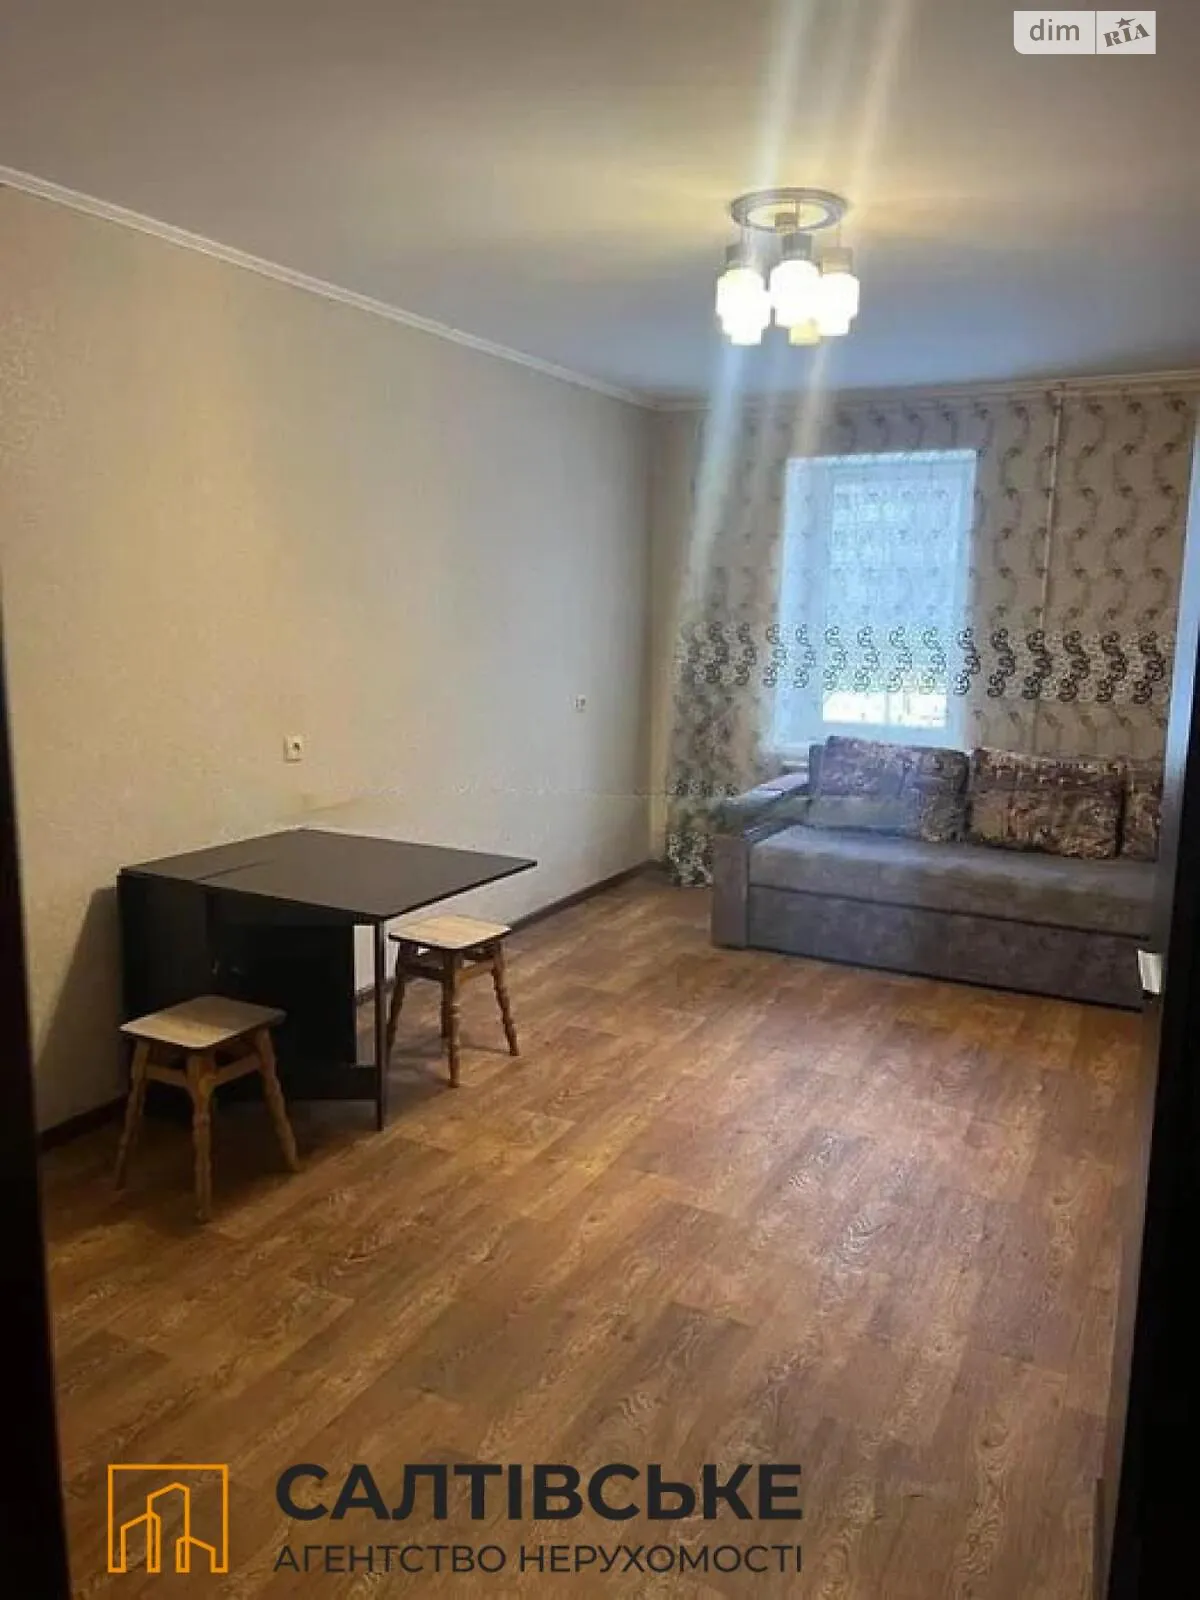 Продается комната 26 кв. м в Харькове - фото 3